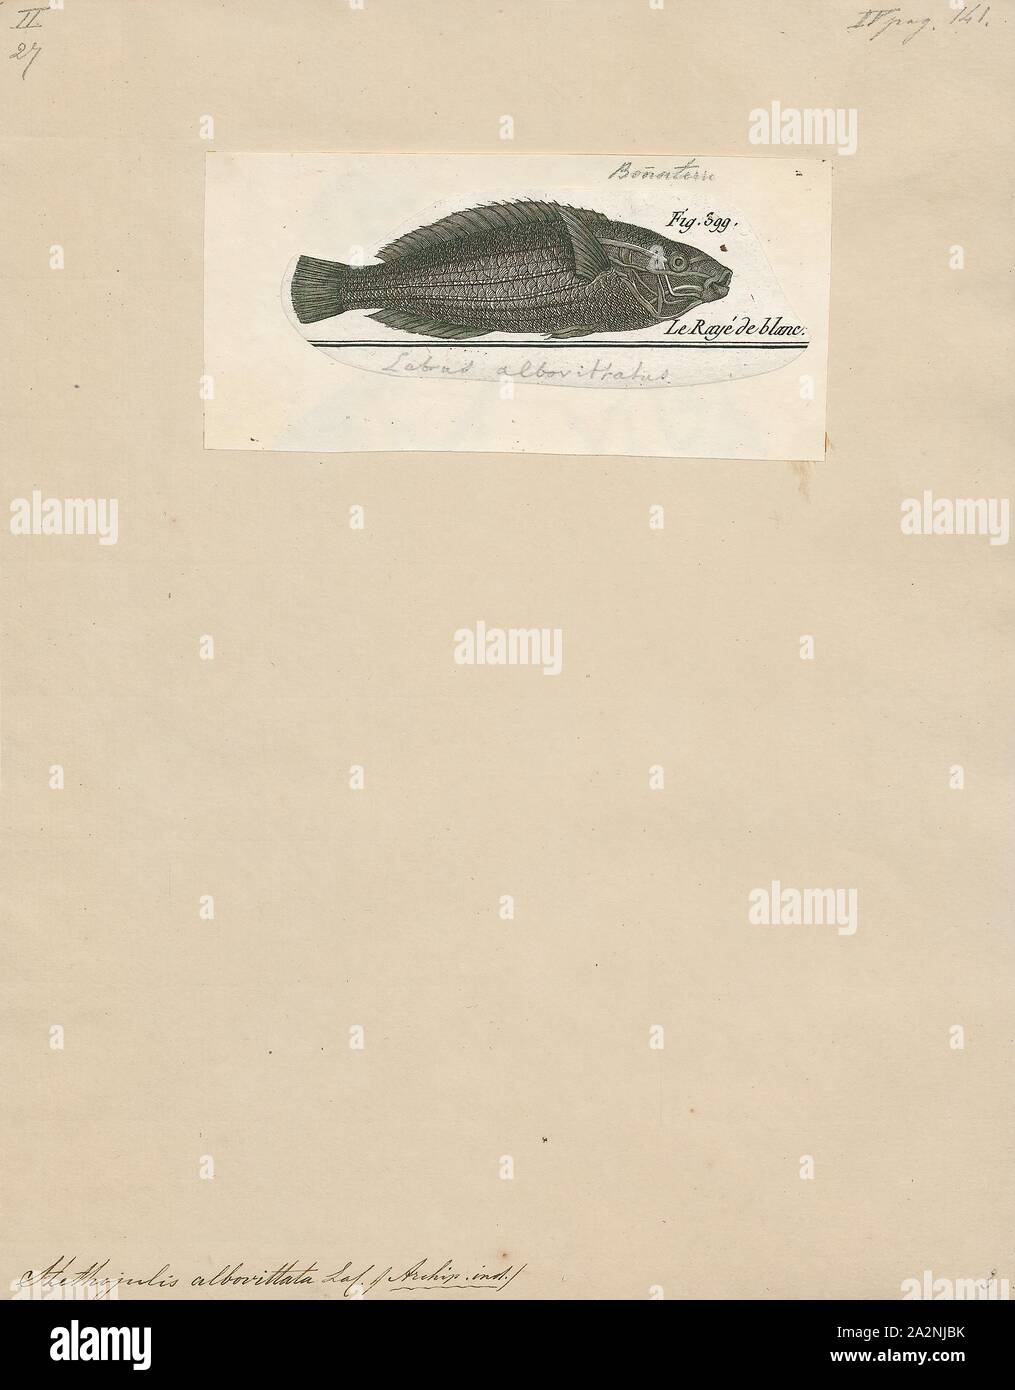 Stethojulis albovittata, Print, Stethojulis albovittatus, commonly known as the Rainbowfish, is a reef-dwelling fish that feeds on small invertebrates., 1788 Stock Photo